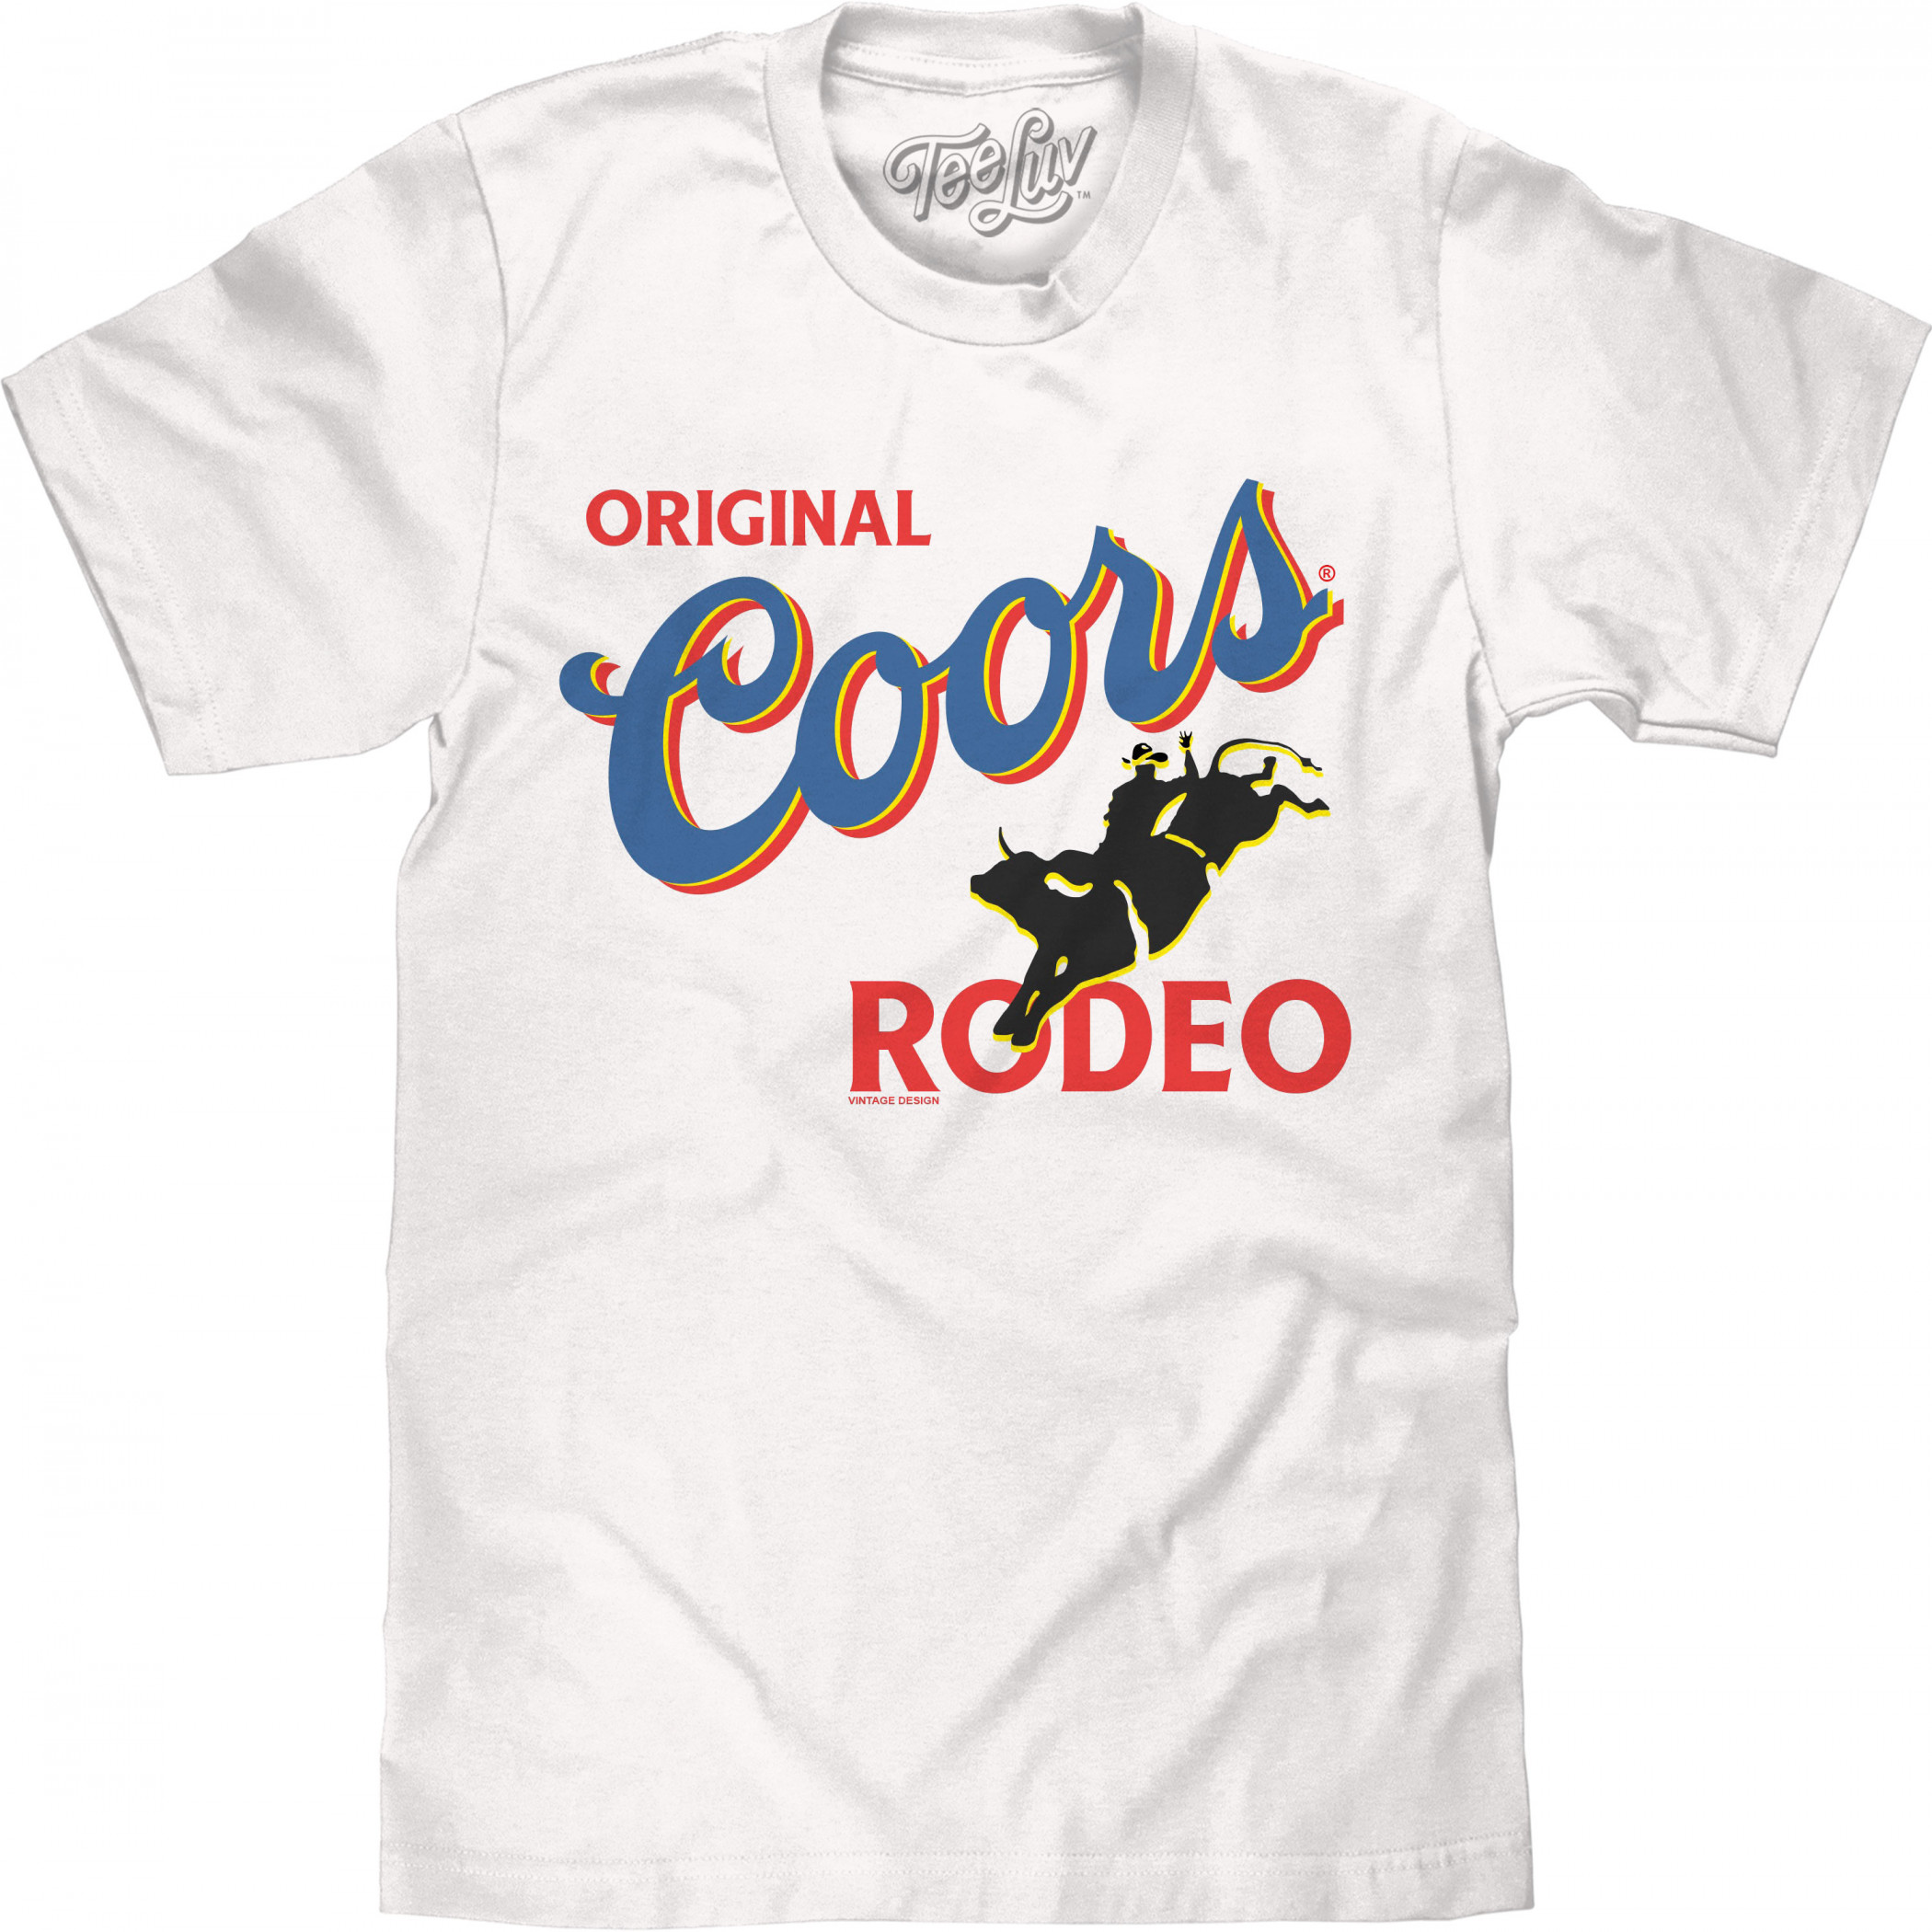 Coors Rodeo Bull T-Shirt